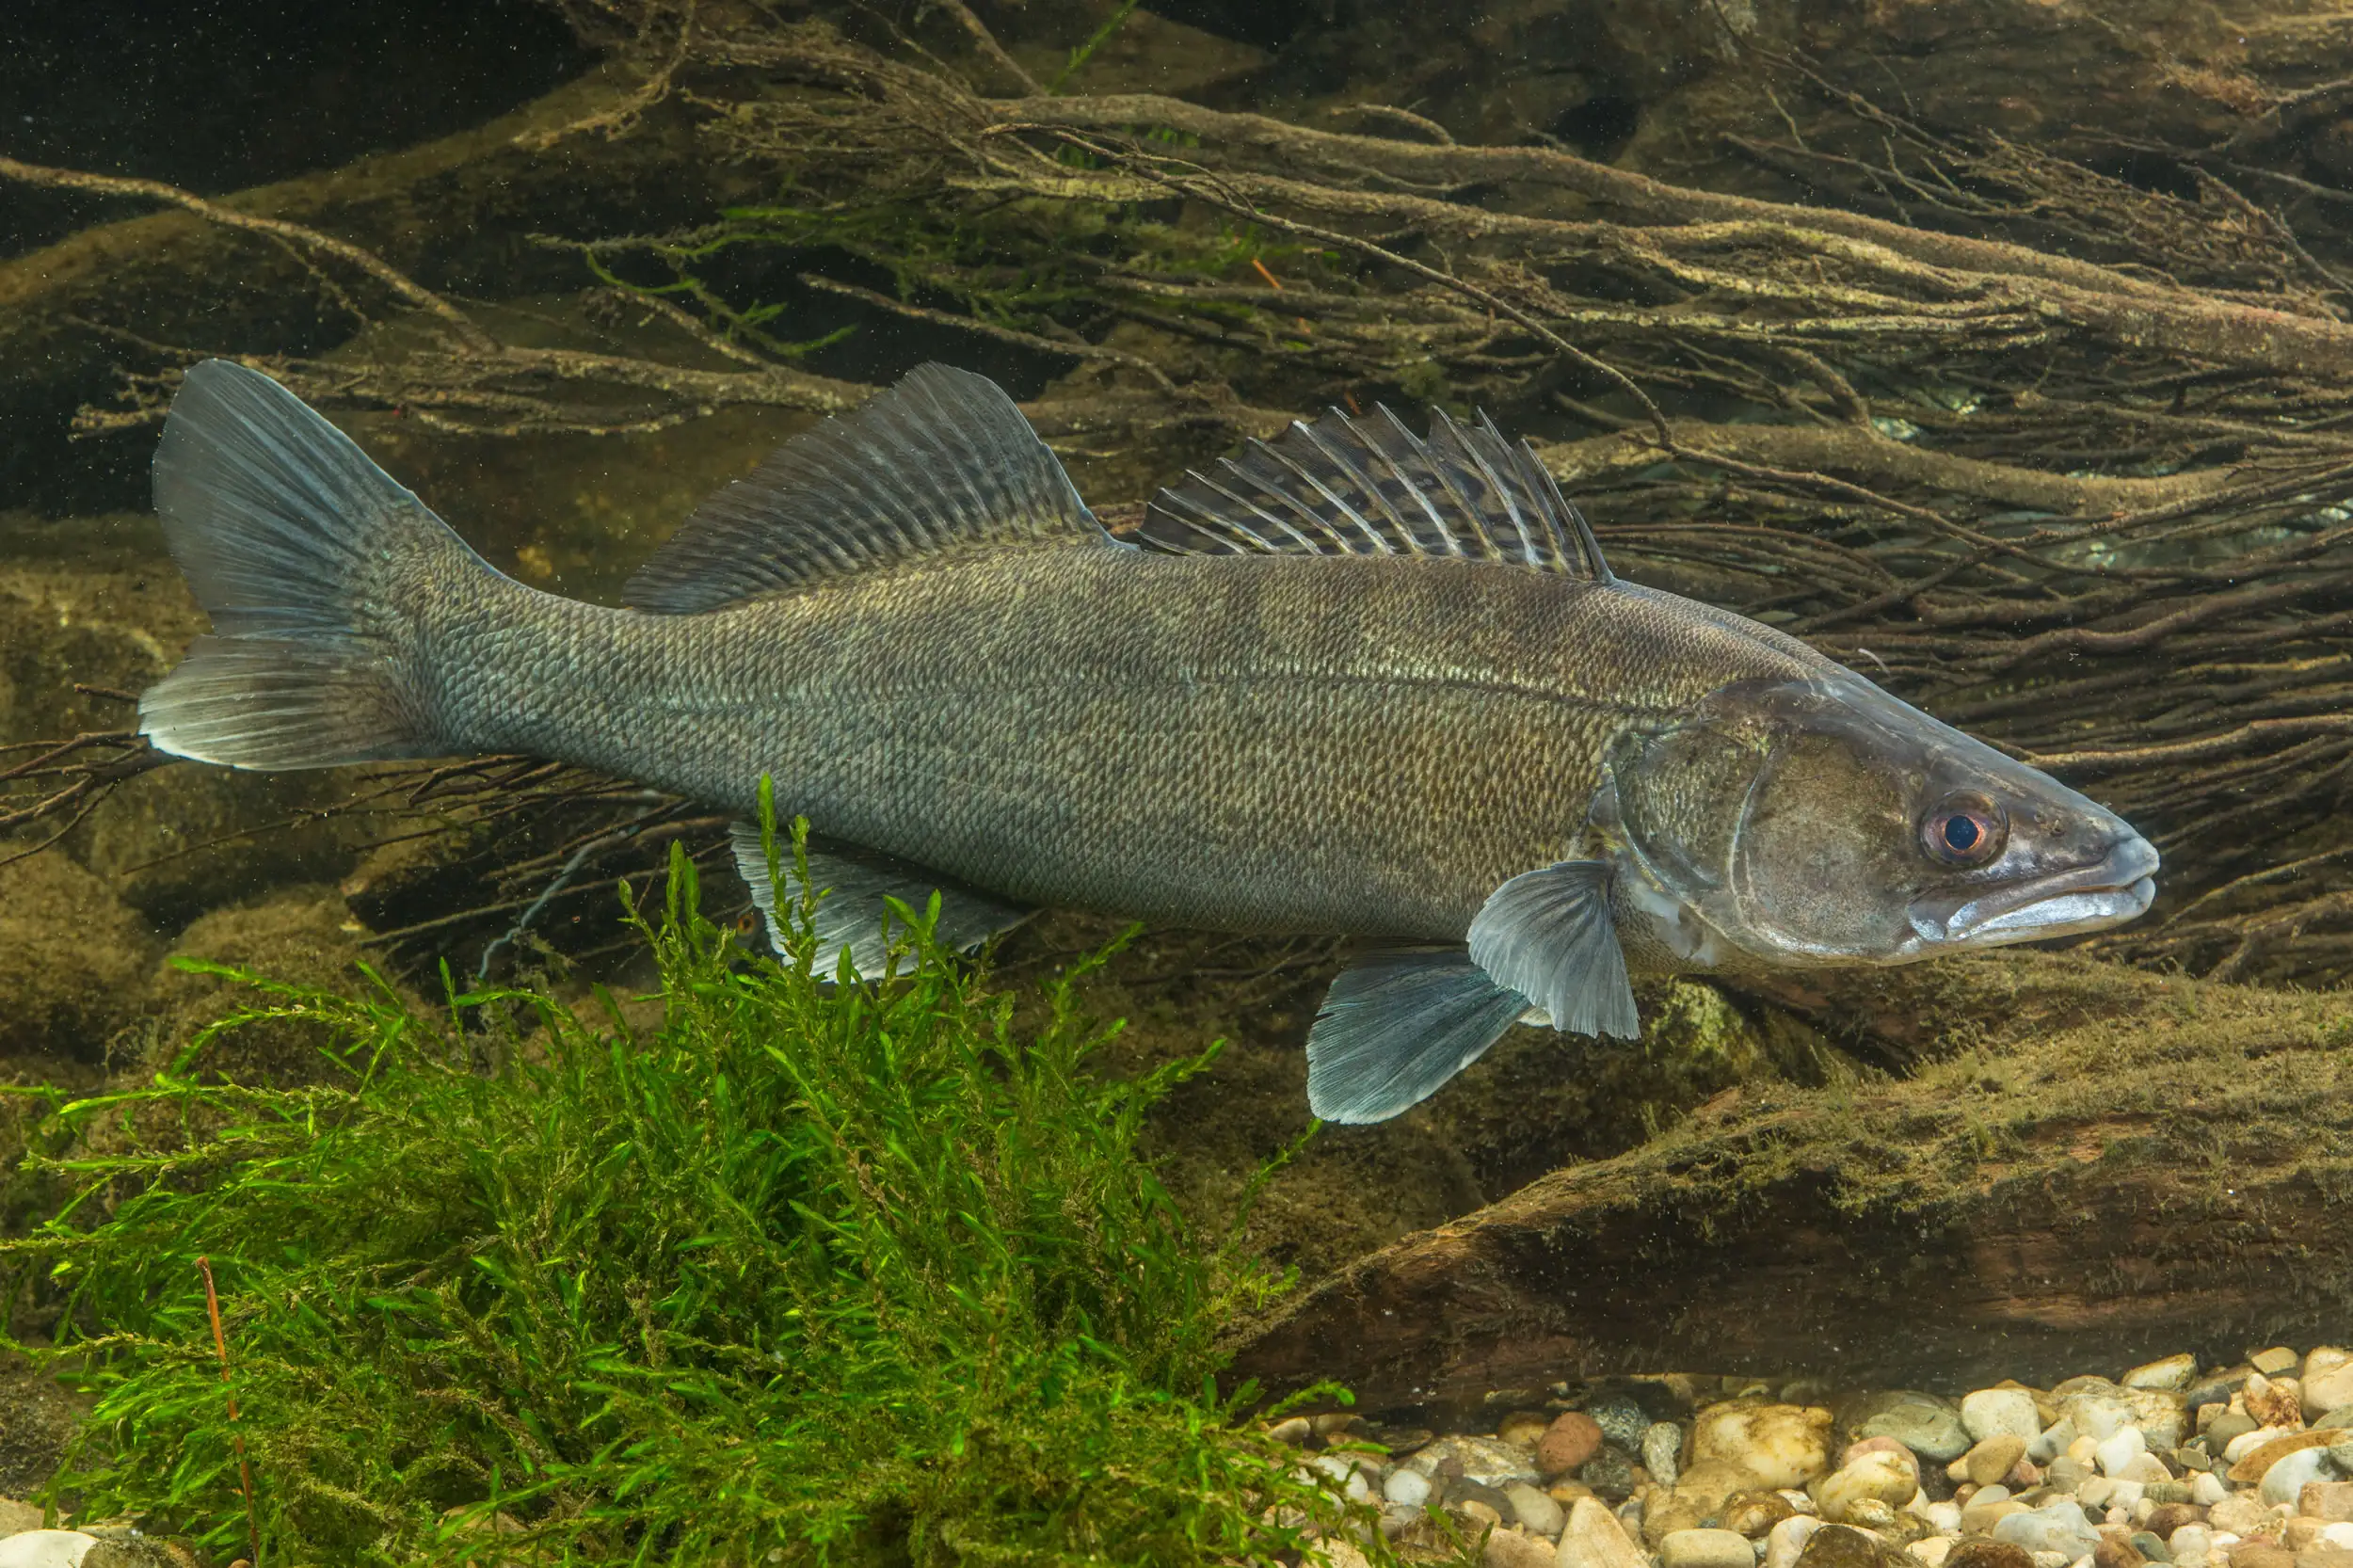 Riba smuđ vretenastog tela, sitne krljušti i raširenih peraja pliva po vodenom dnu pored mahovine i položenih grana.